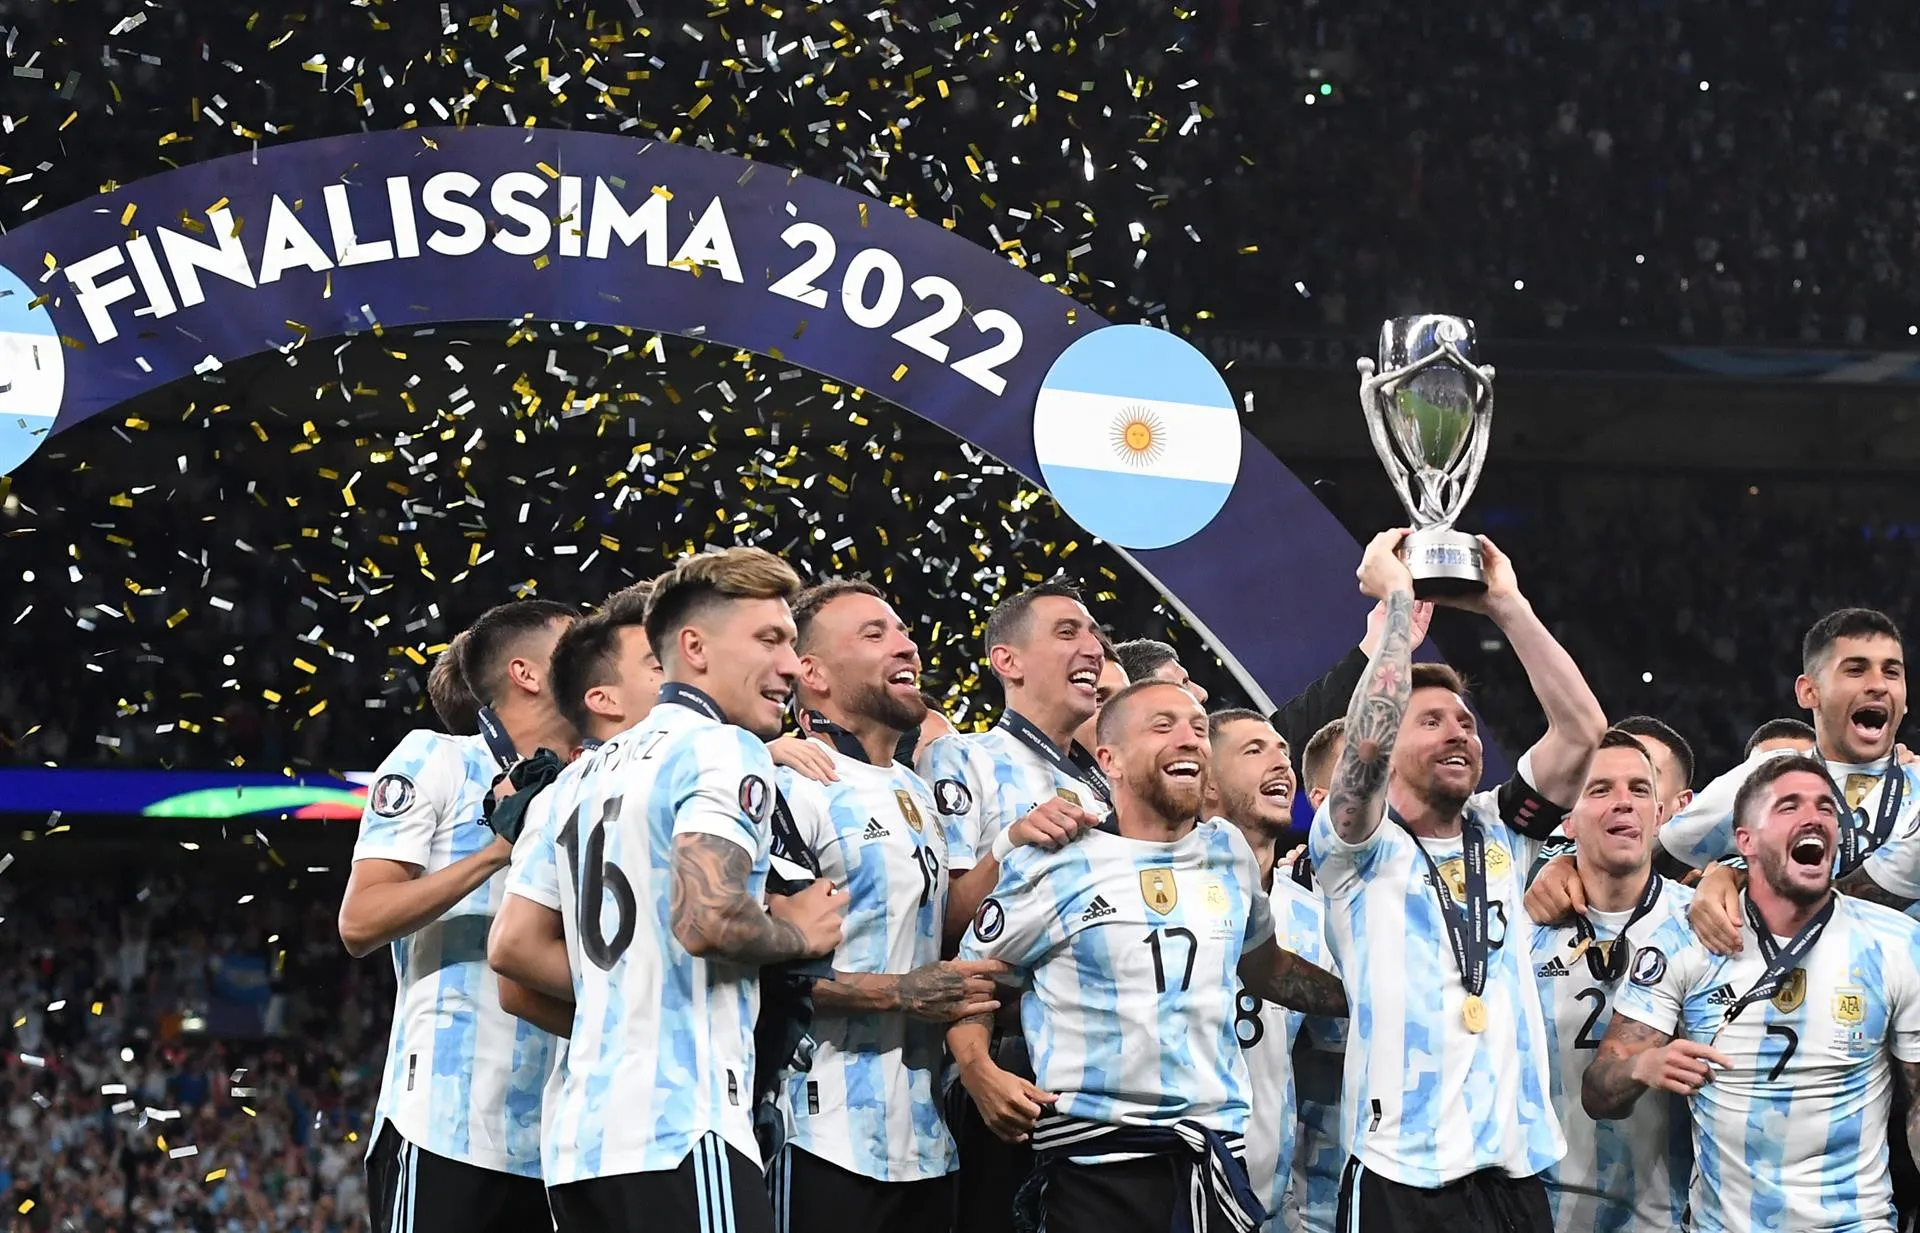 Argentina golea a Italia y levanta la Finalíssima. Messi tras Maradona